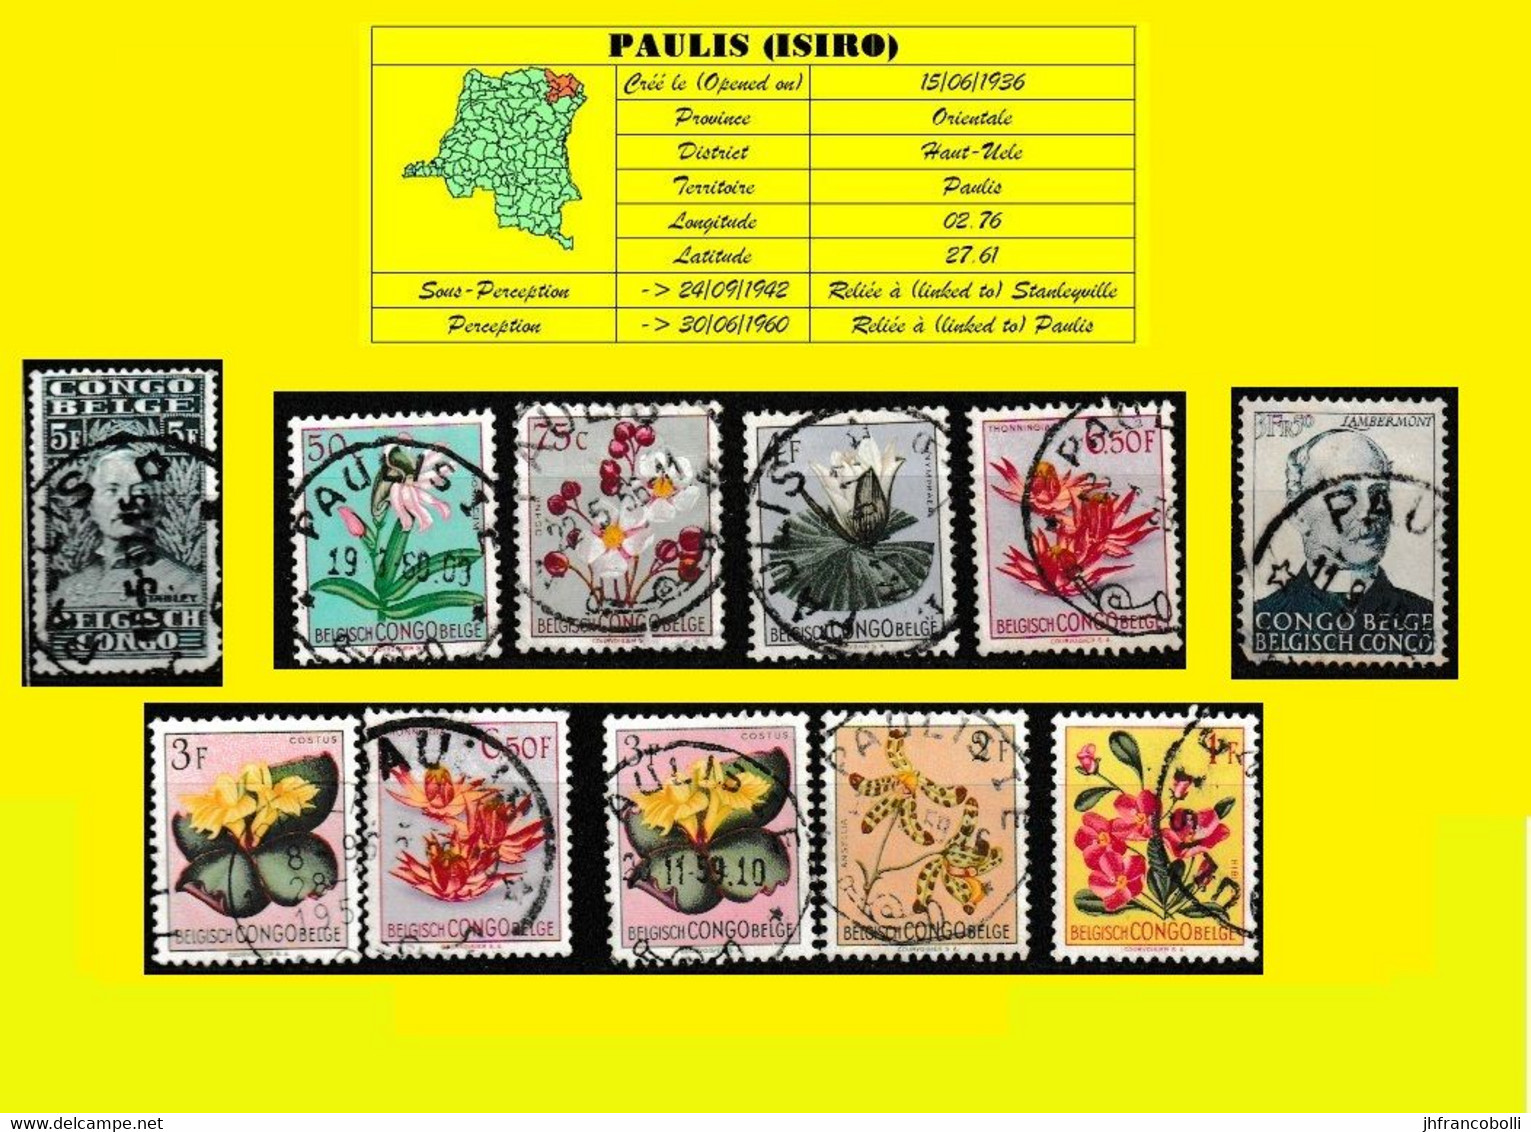 (°) BELGIAN CONGO / CONGO BELGE =  PAULIS CANCELATION STUDY = 11 STAMPS (mainly Tropical Flowers) - Variedades Y Curiosidades